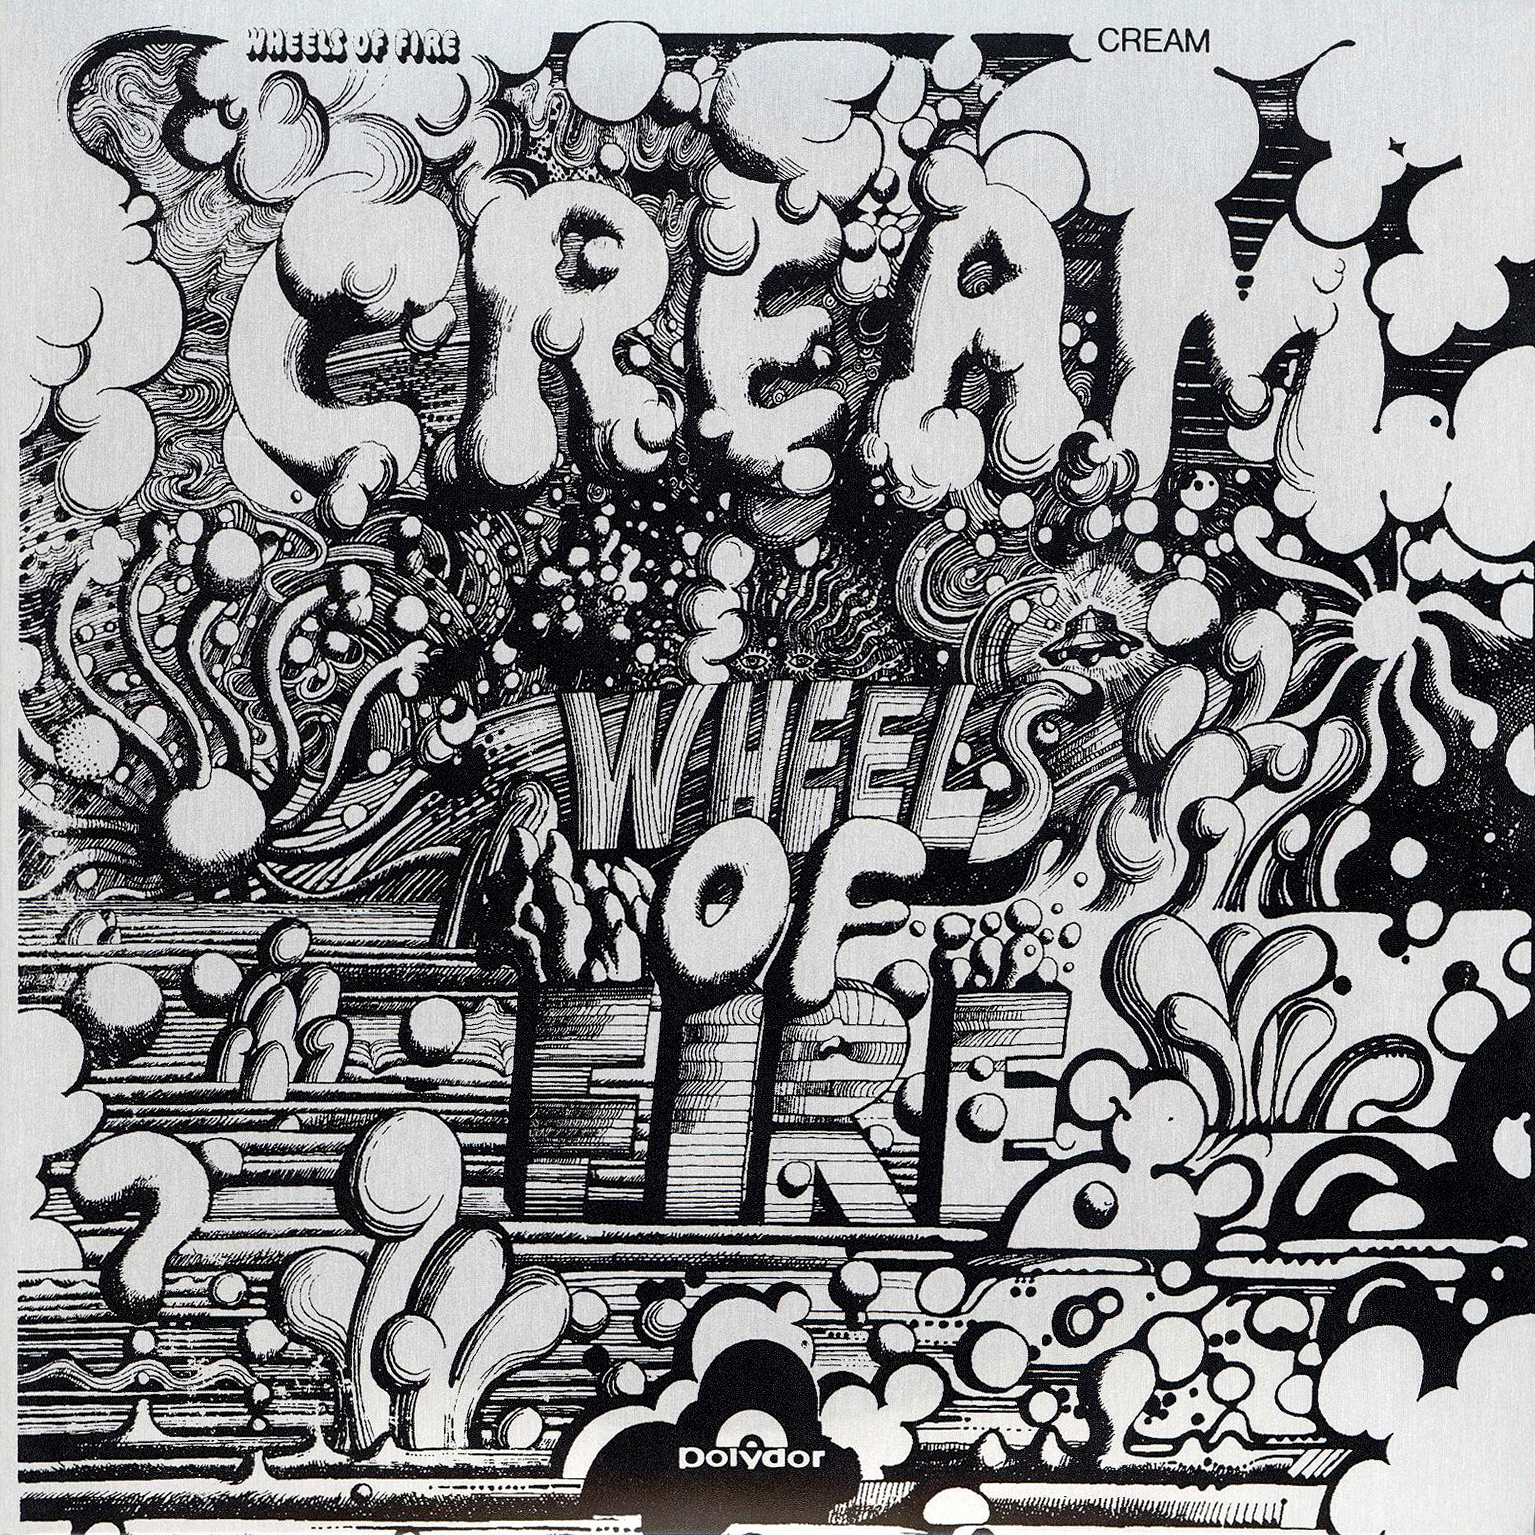 Release “Wheels of Fire” by Cream - Cover Art - MusicBrainz